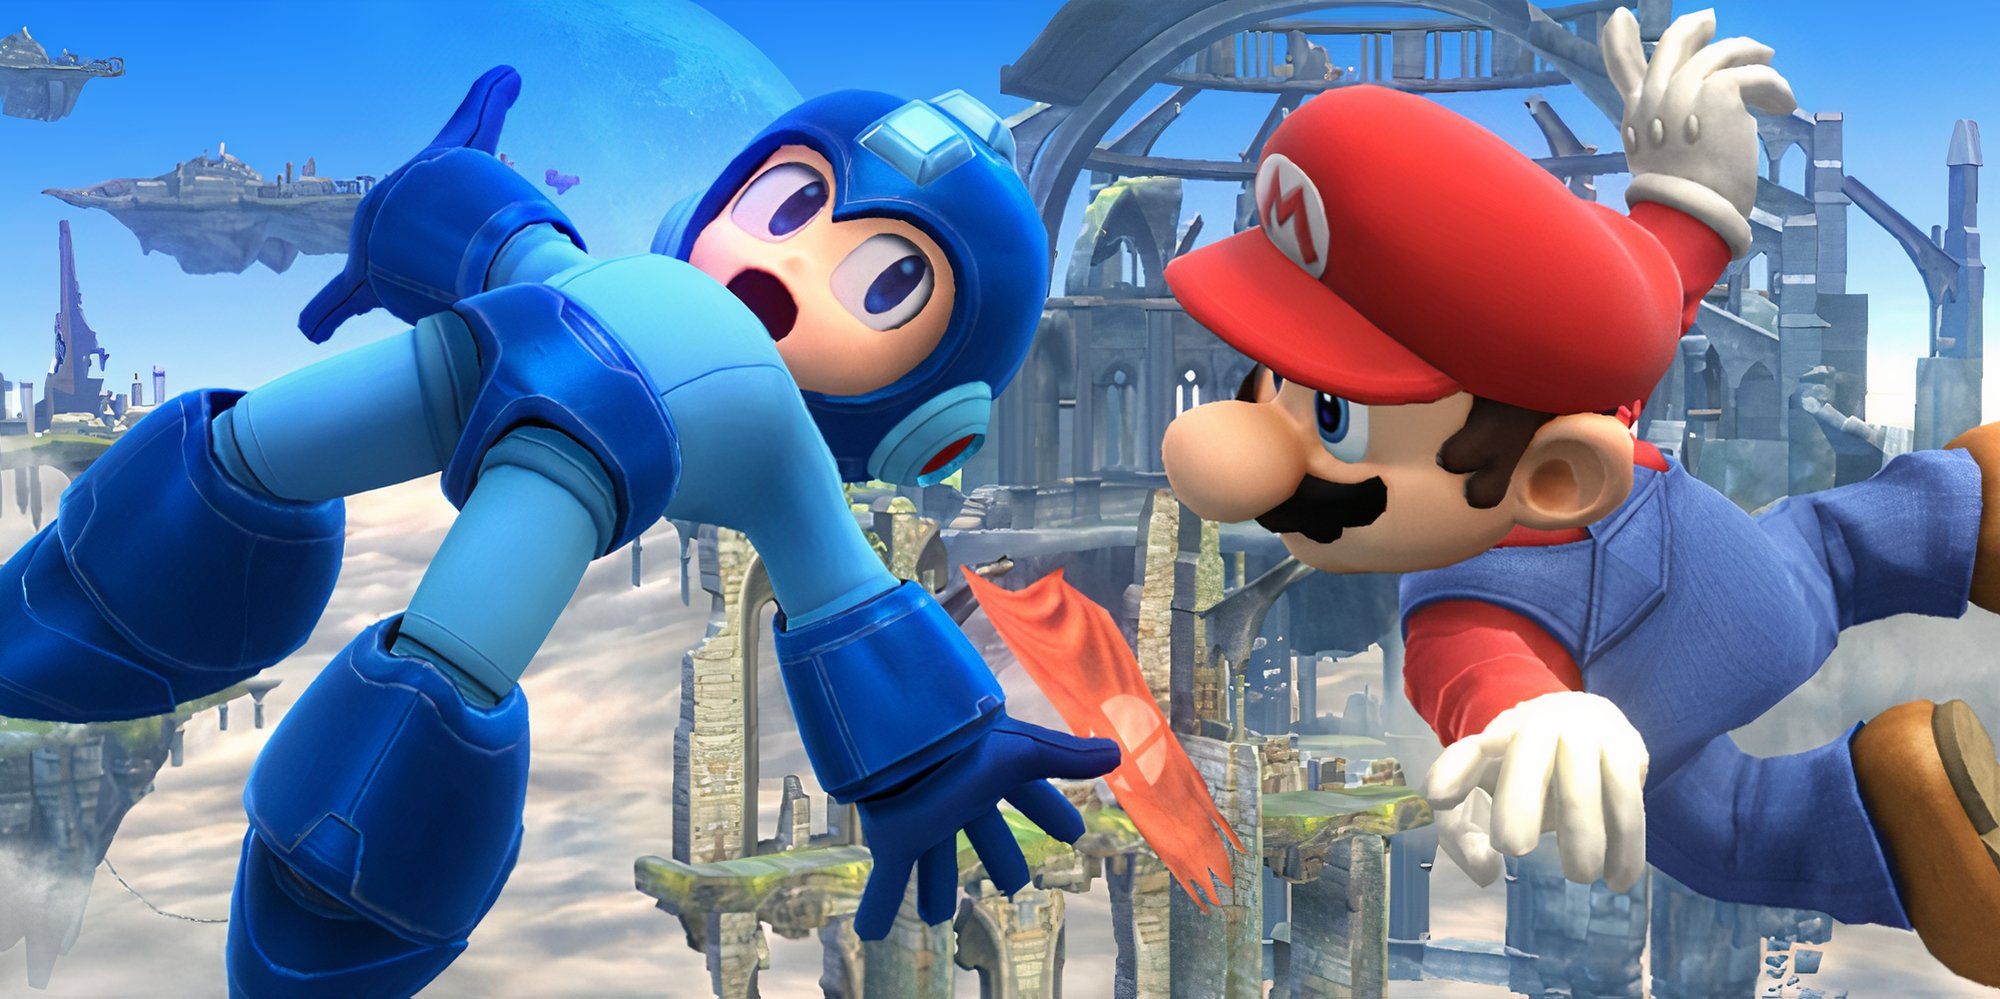 Mega Man fighting Mario in Super Smash Bros (2014)